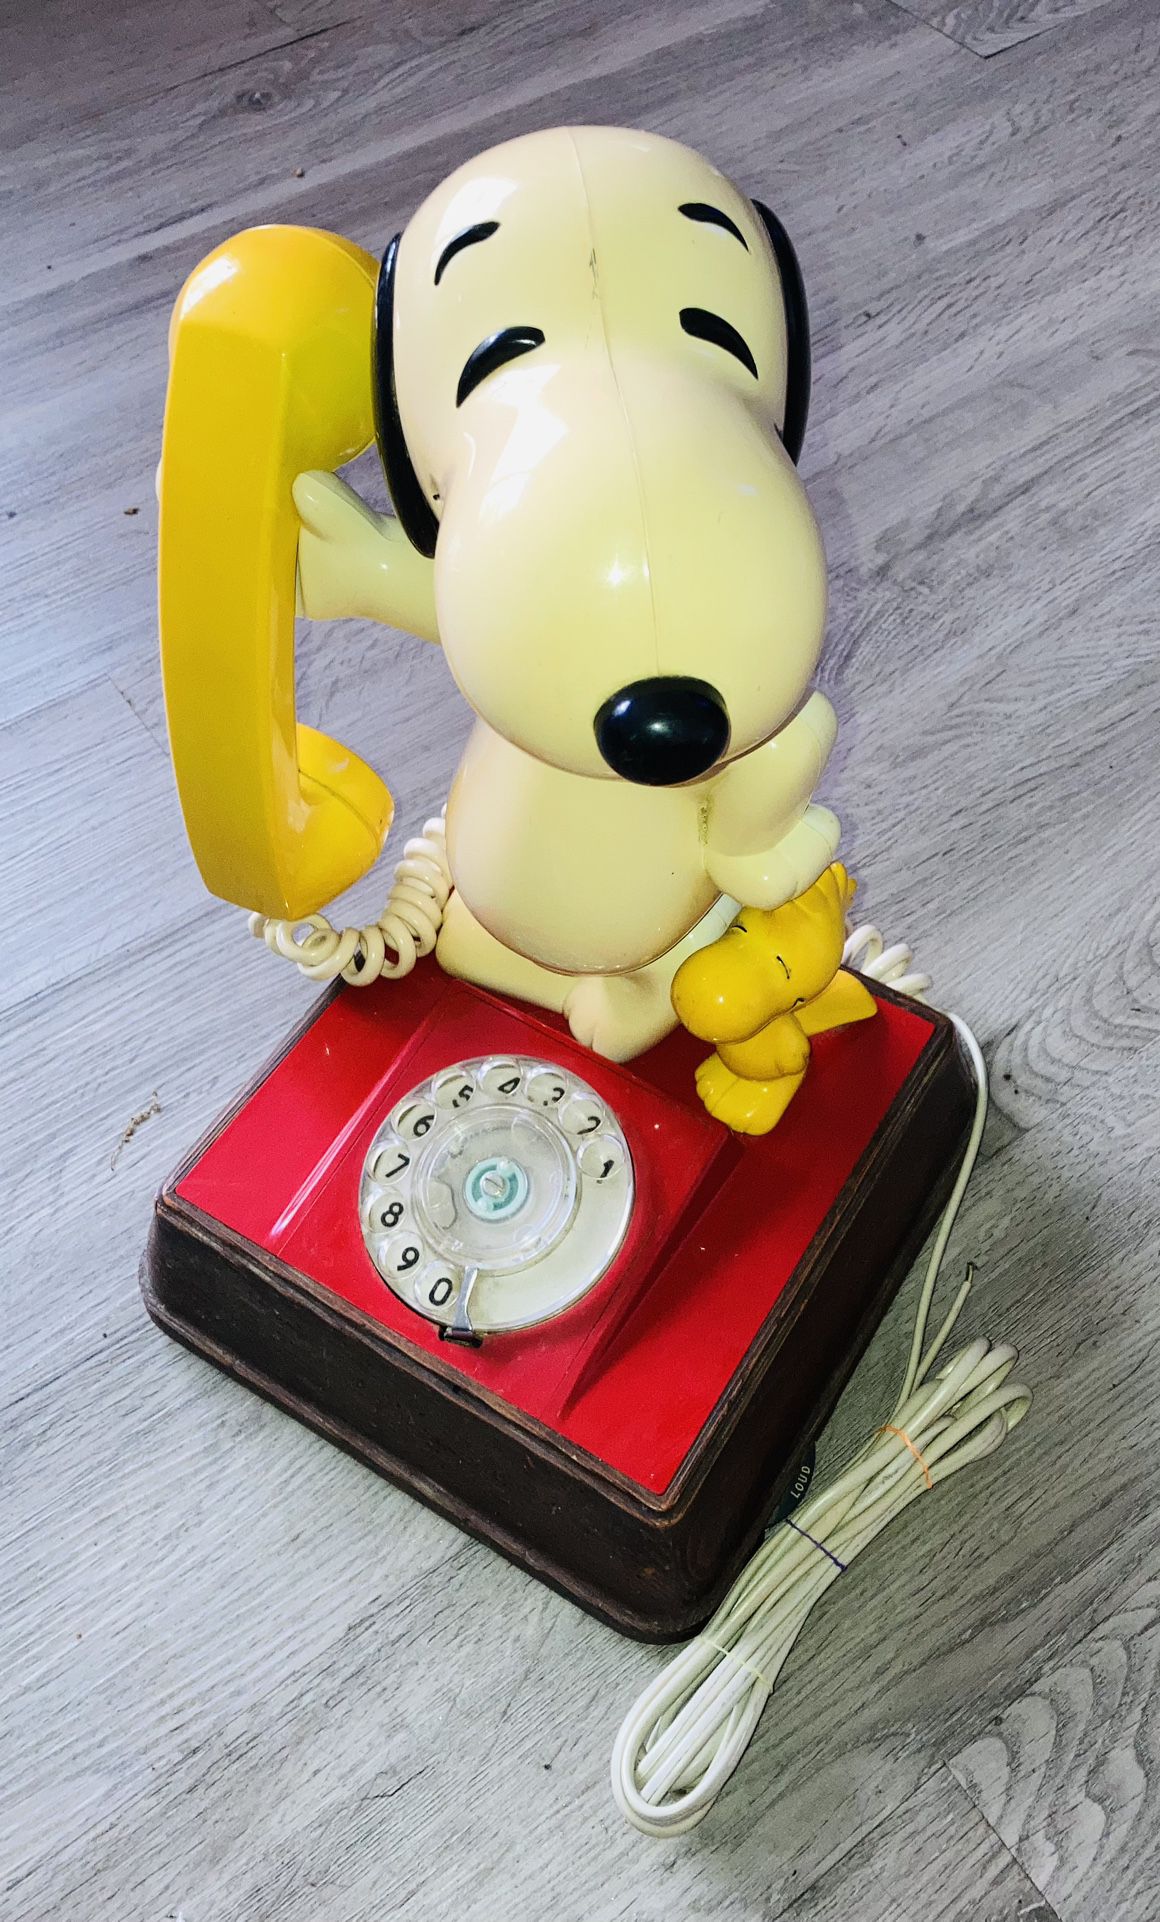 Vintage Snoopy Rotary Home Phone